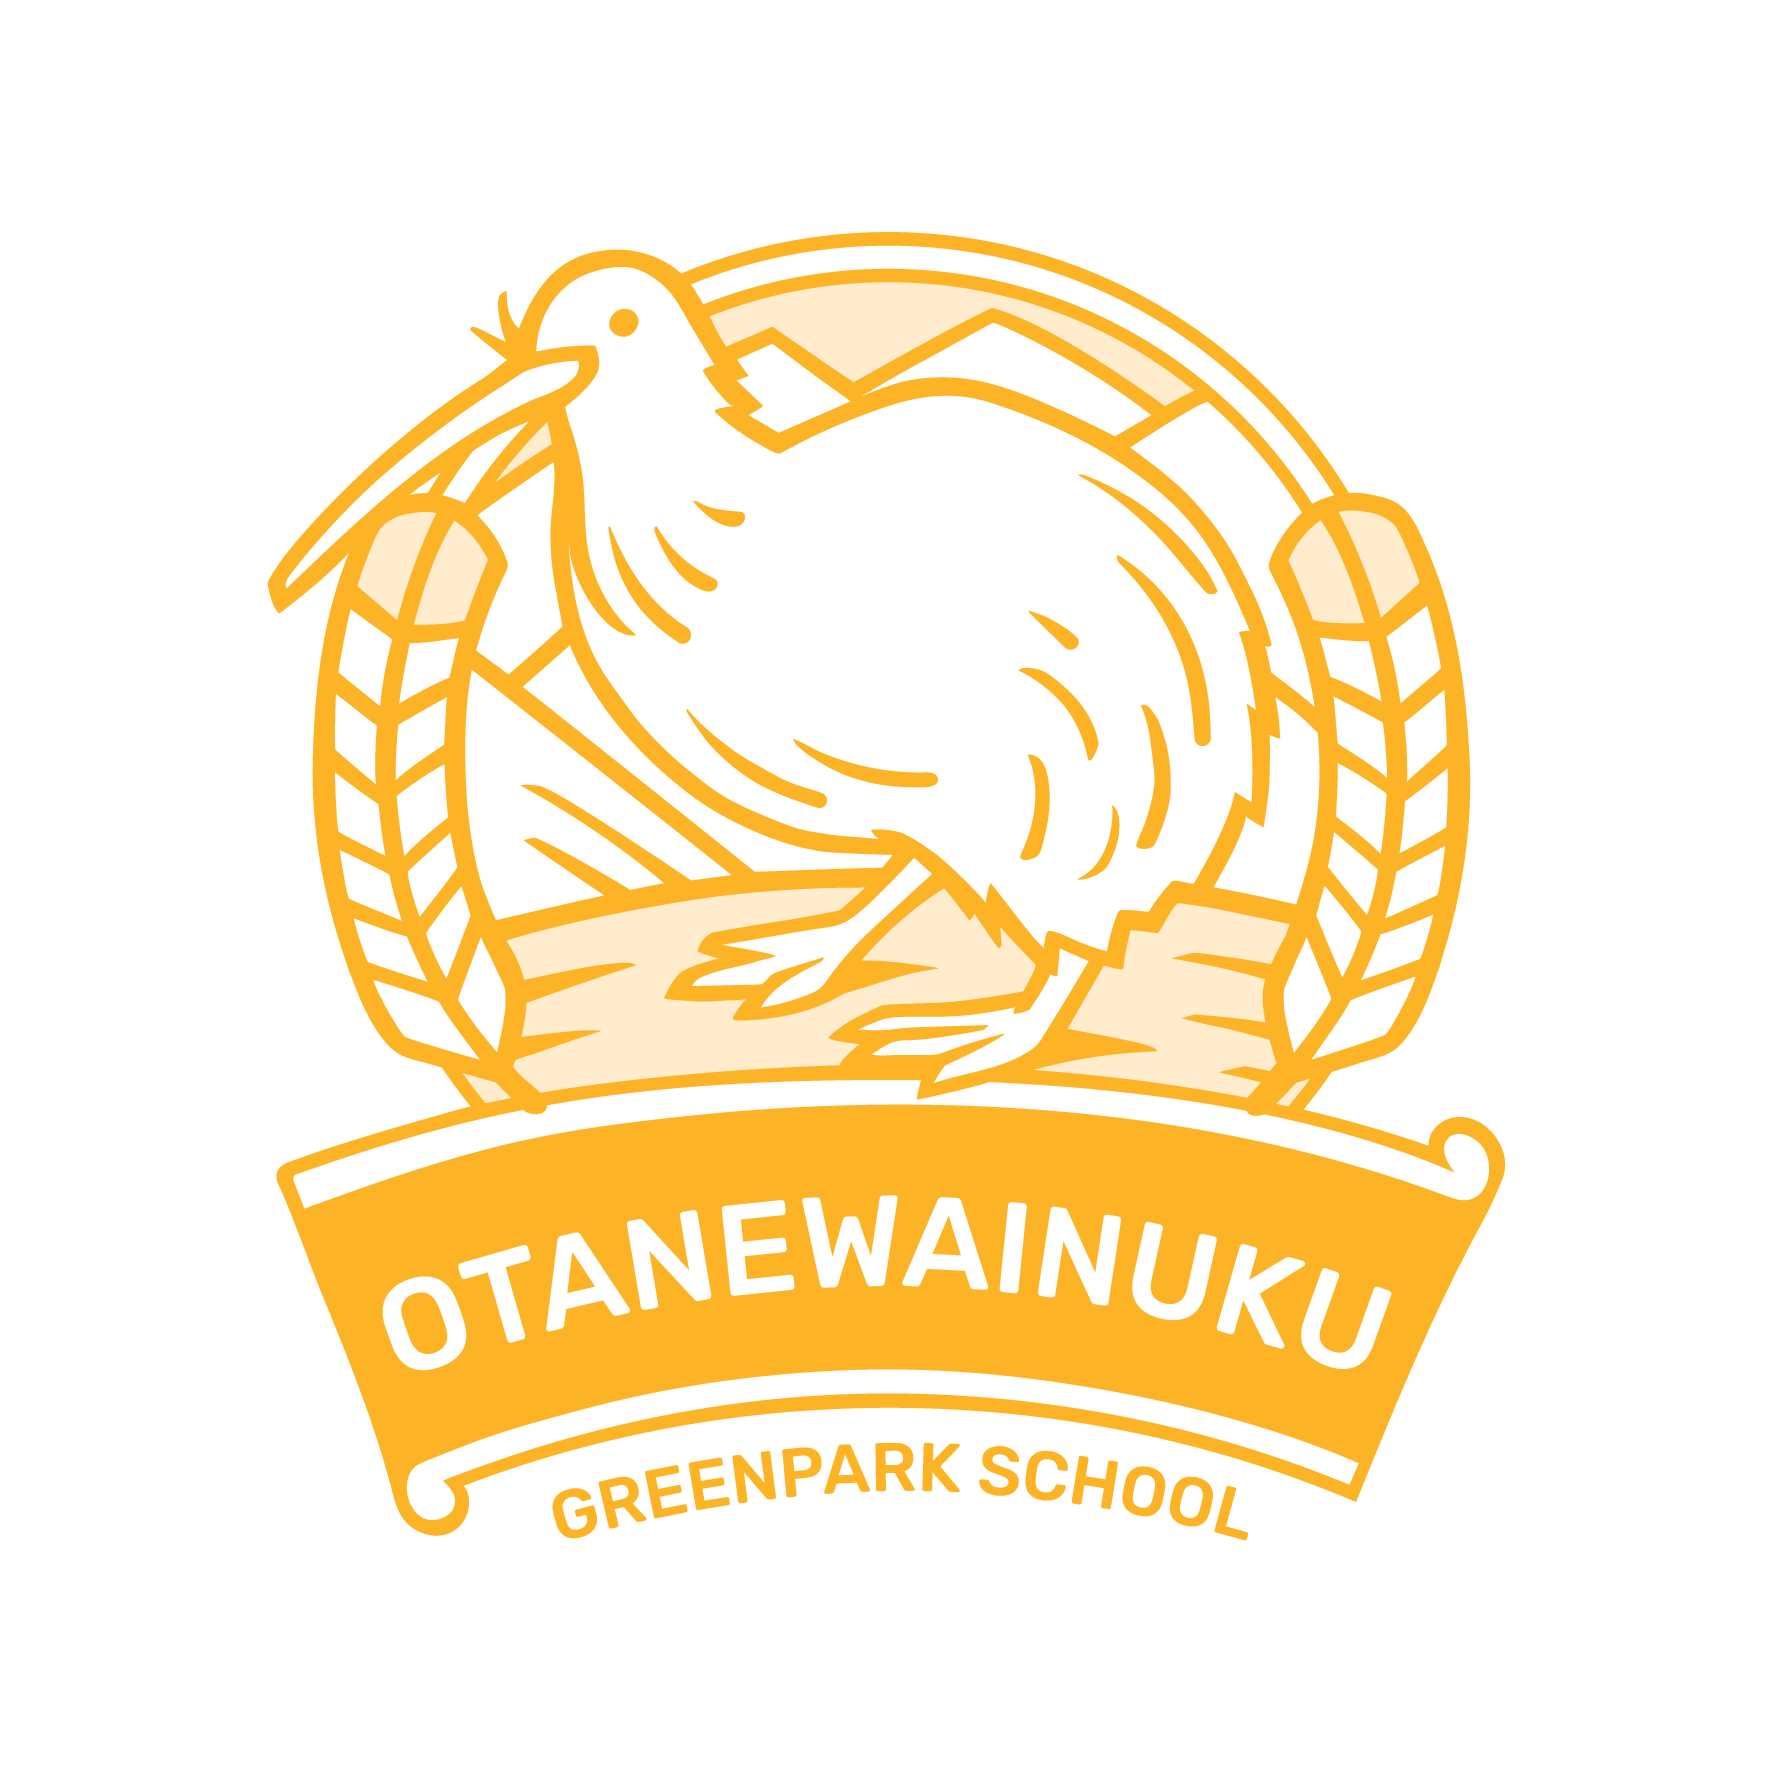 Greenpark School House logo_Otanewainuku.png